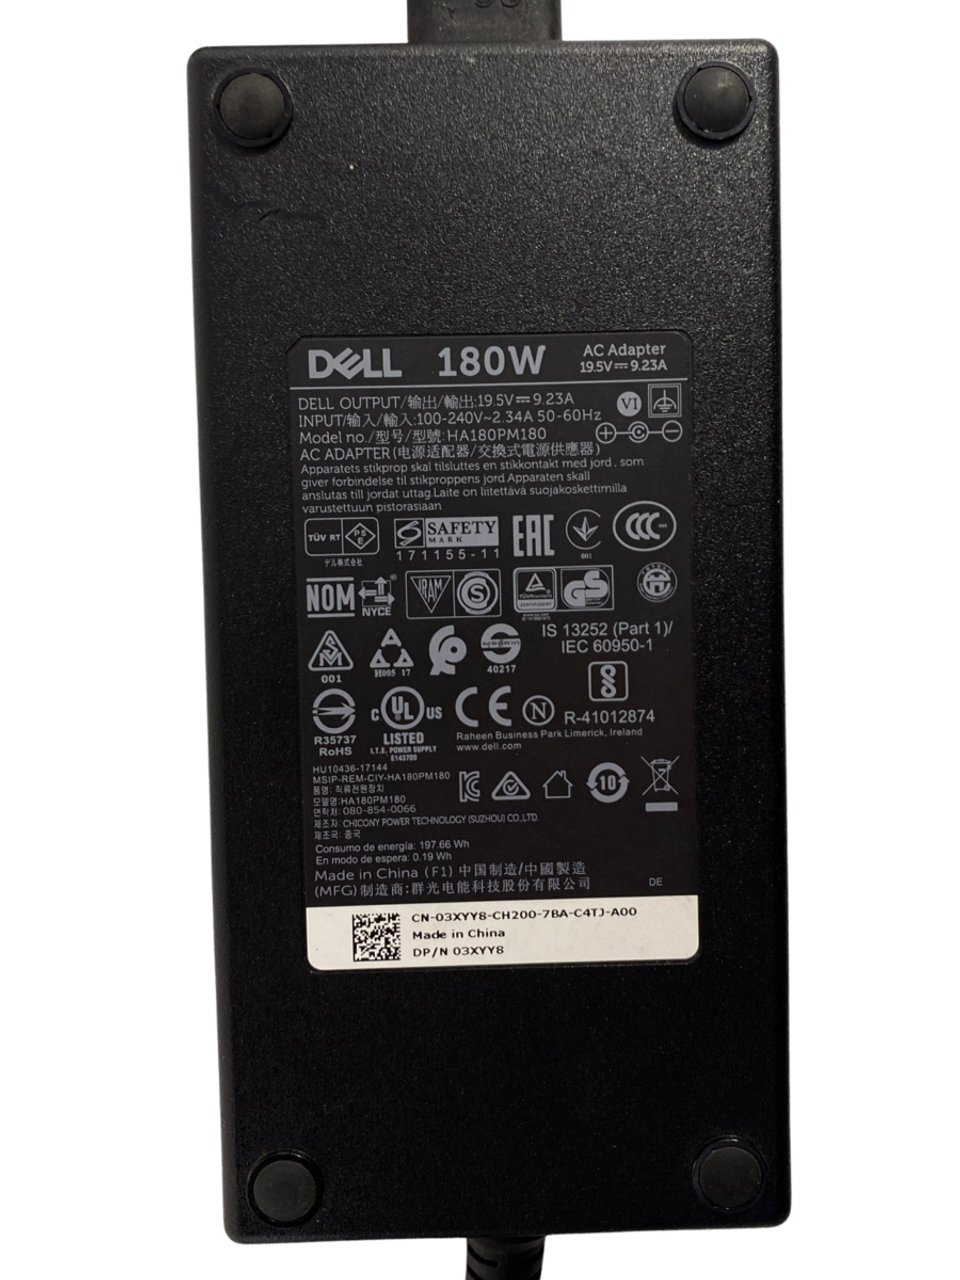 Dell HA180PM180 AC Adapter 180W 19.5V 9.23A